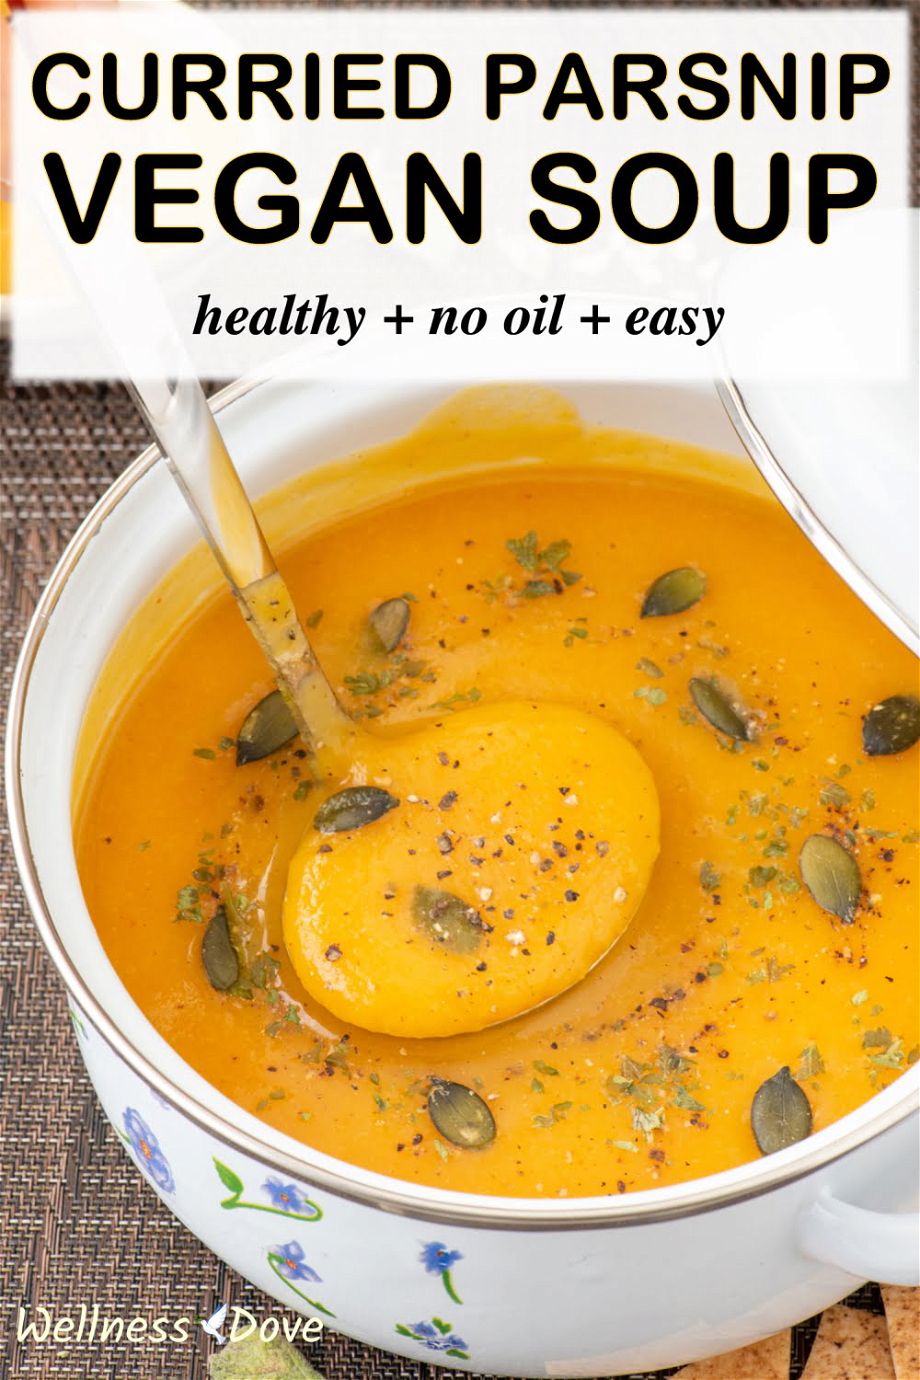 Curried, Sweet Potato Parsnip Vegan Soup | WellnessDove